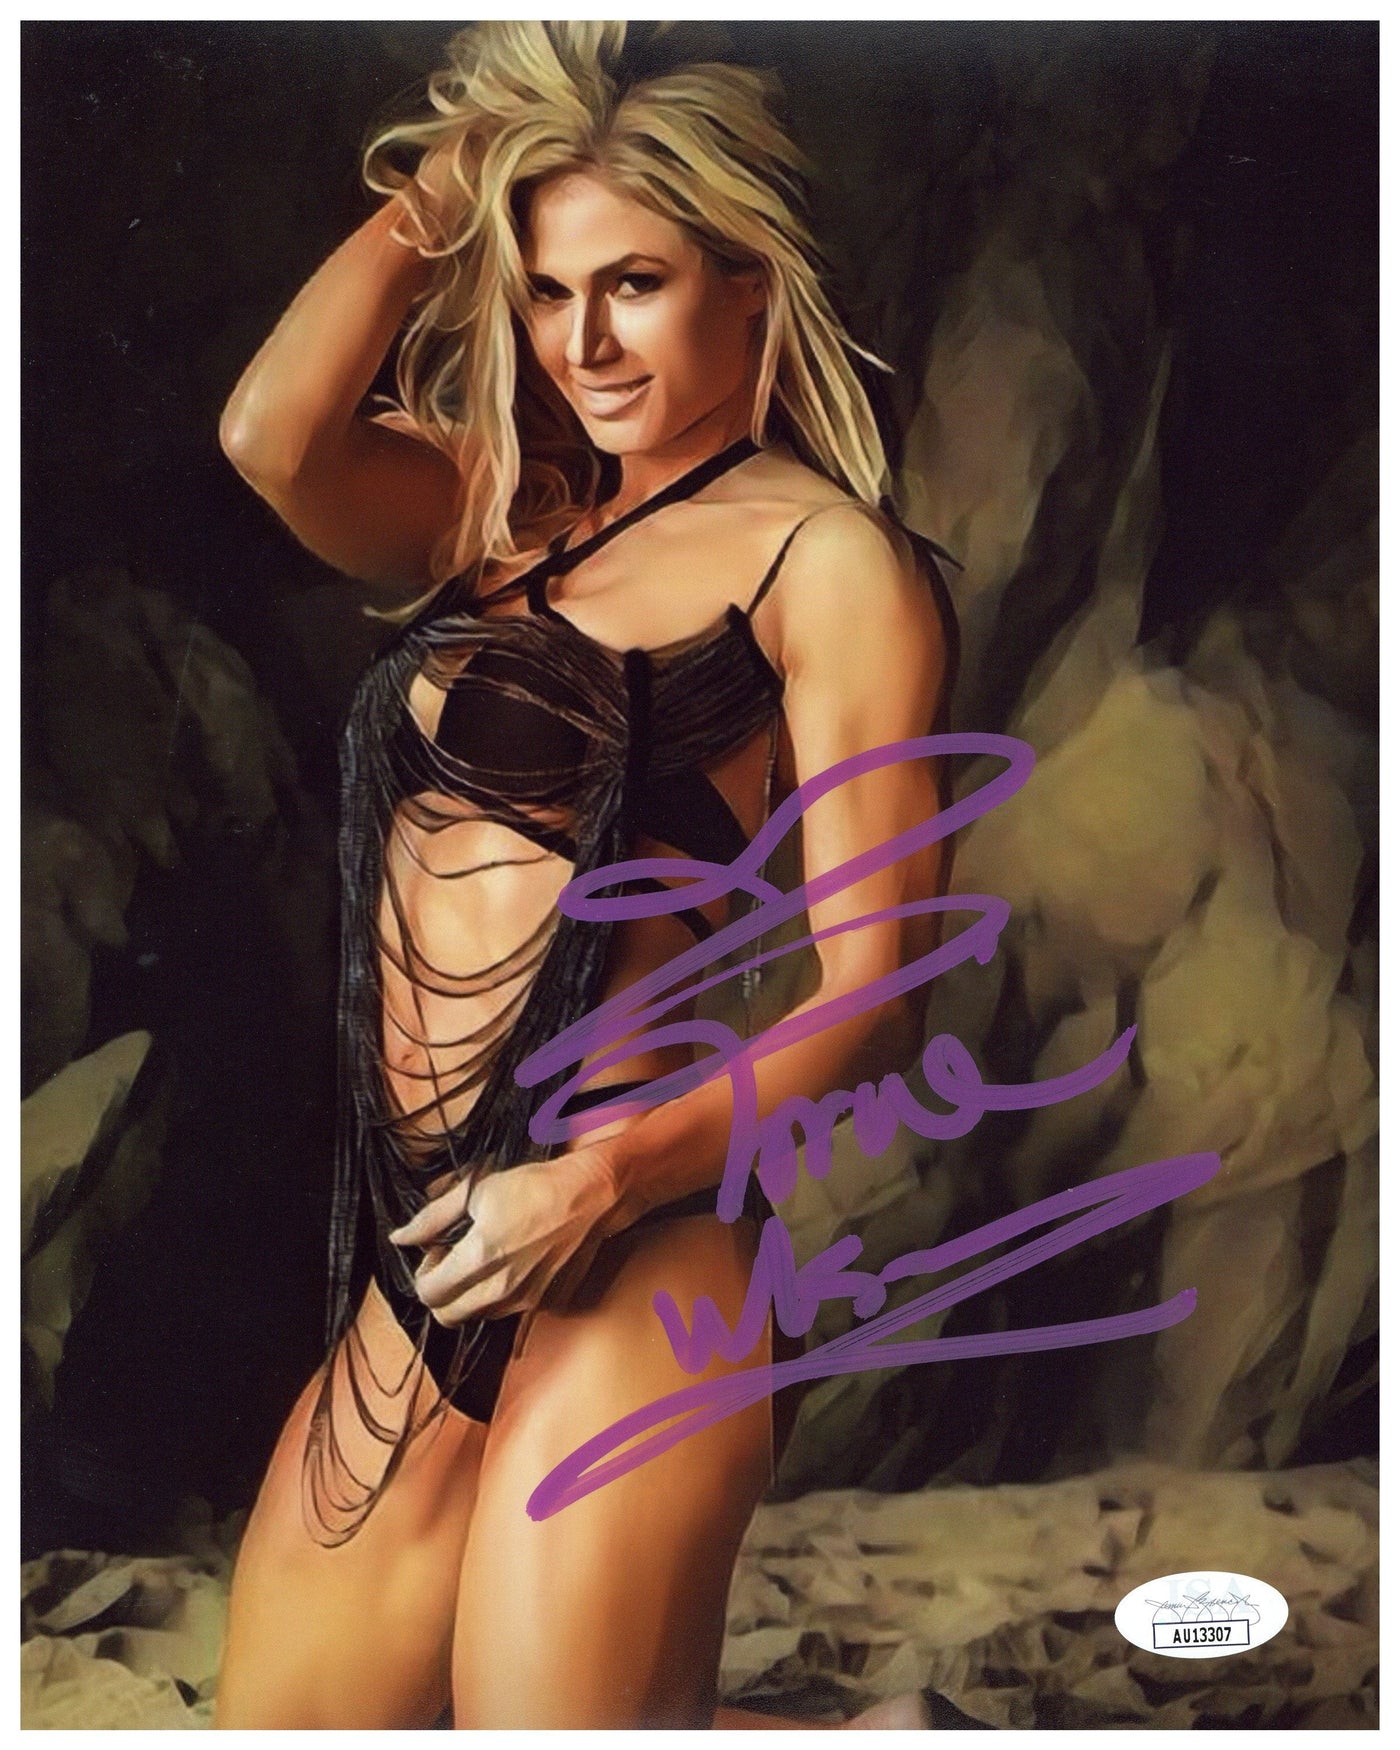 Torrie Wilson Signed 8x10 Photo WWE WWF DIVA Autographed JSA COA #10